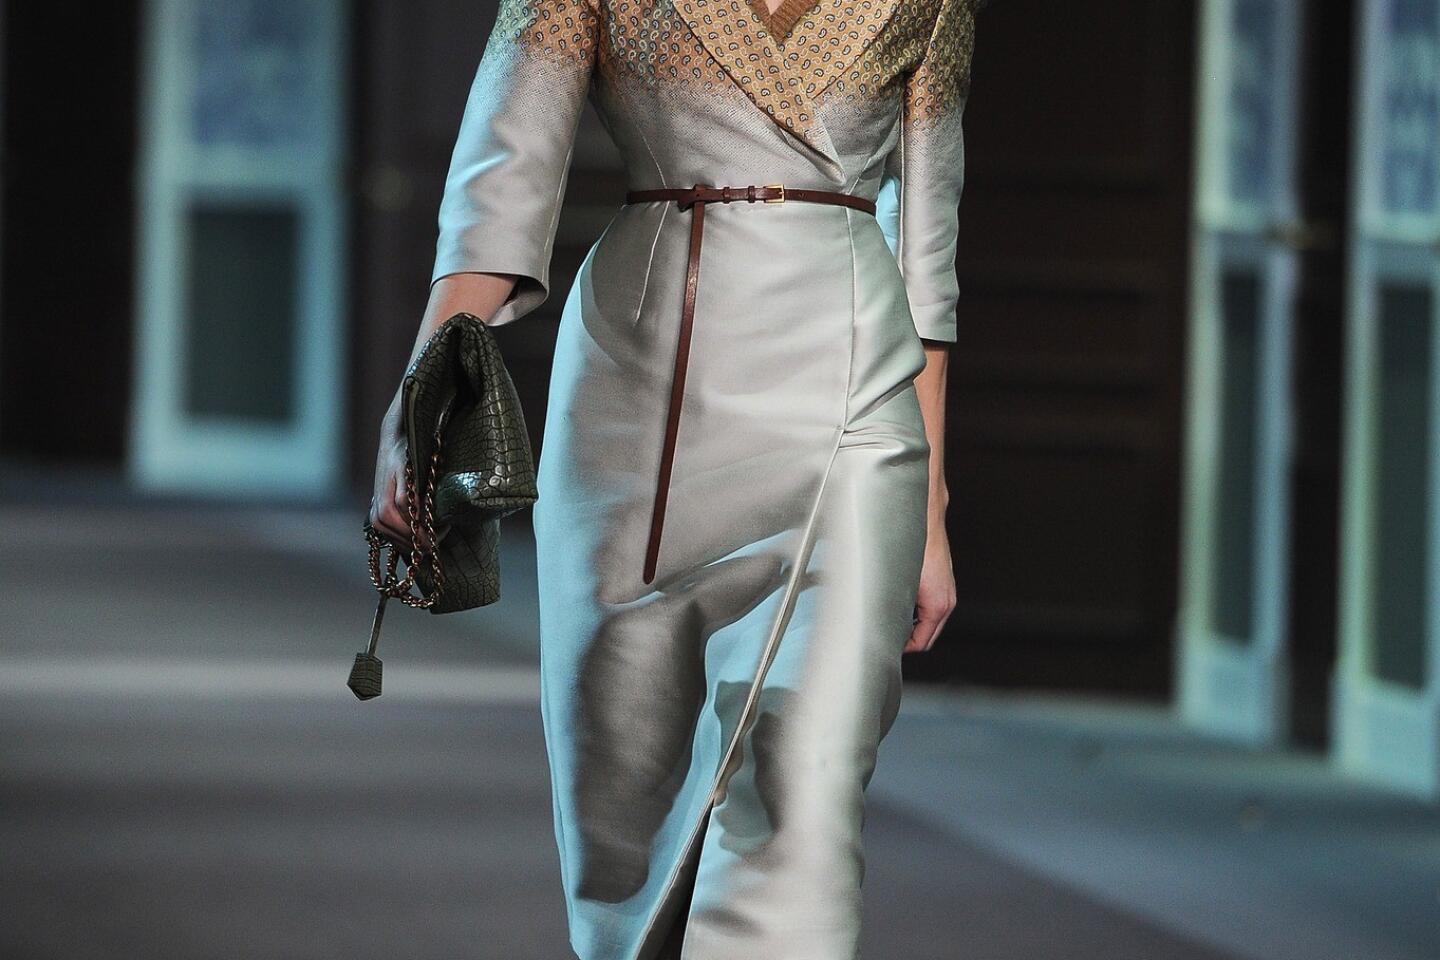 Paris Fashion Week fall 2013: Louis Vuitton review - Los Angeles Times